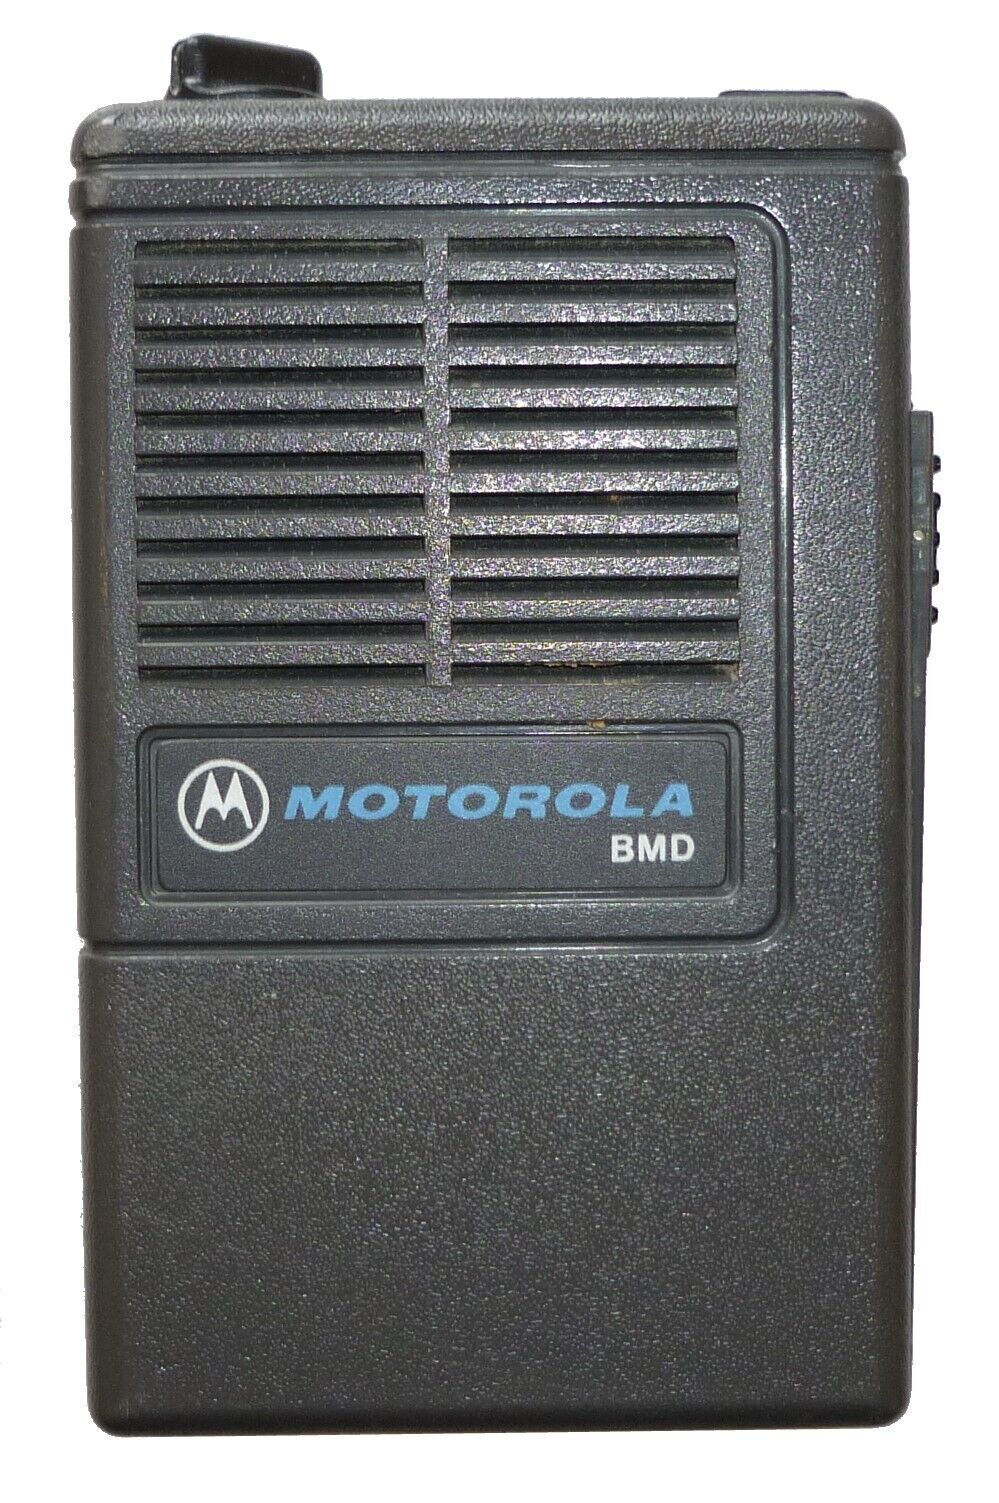 Motorola BMD Funkmeldeempfänger analog